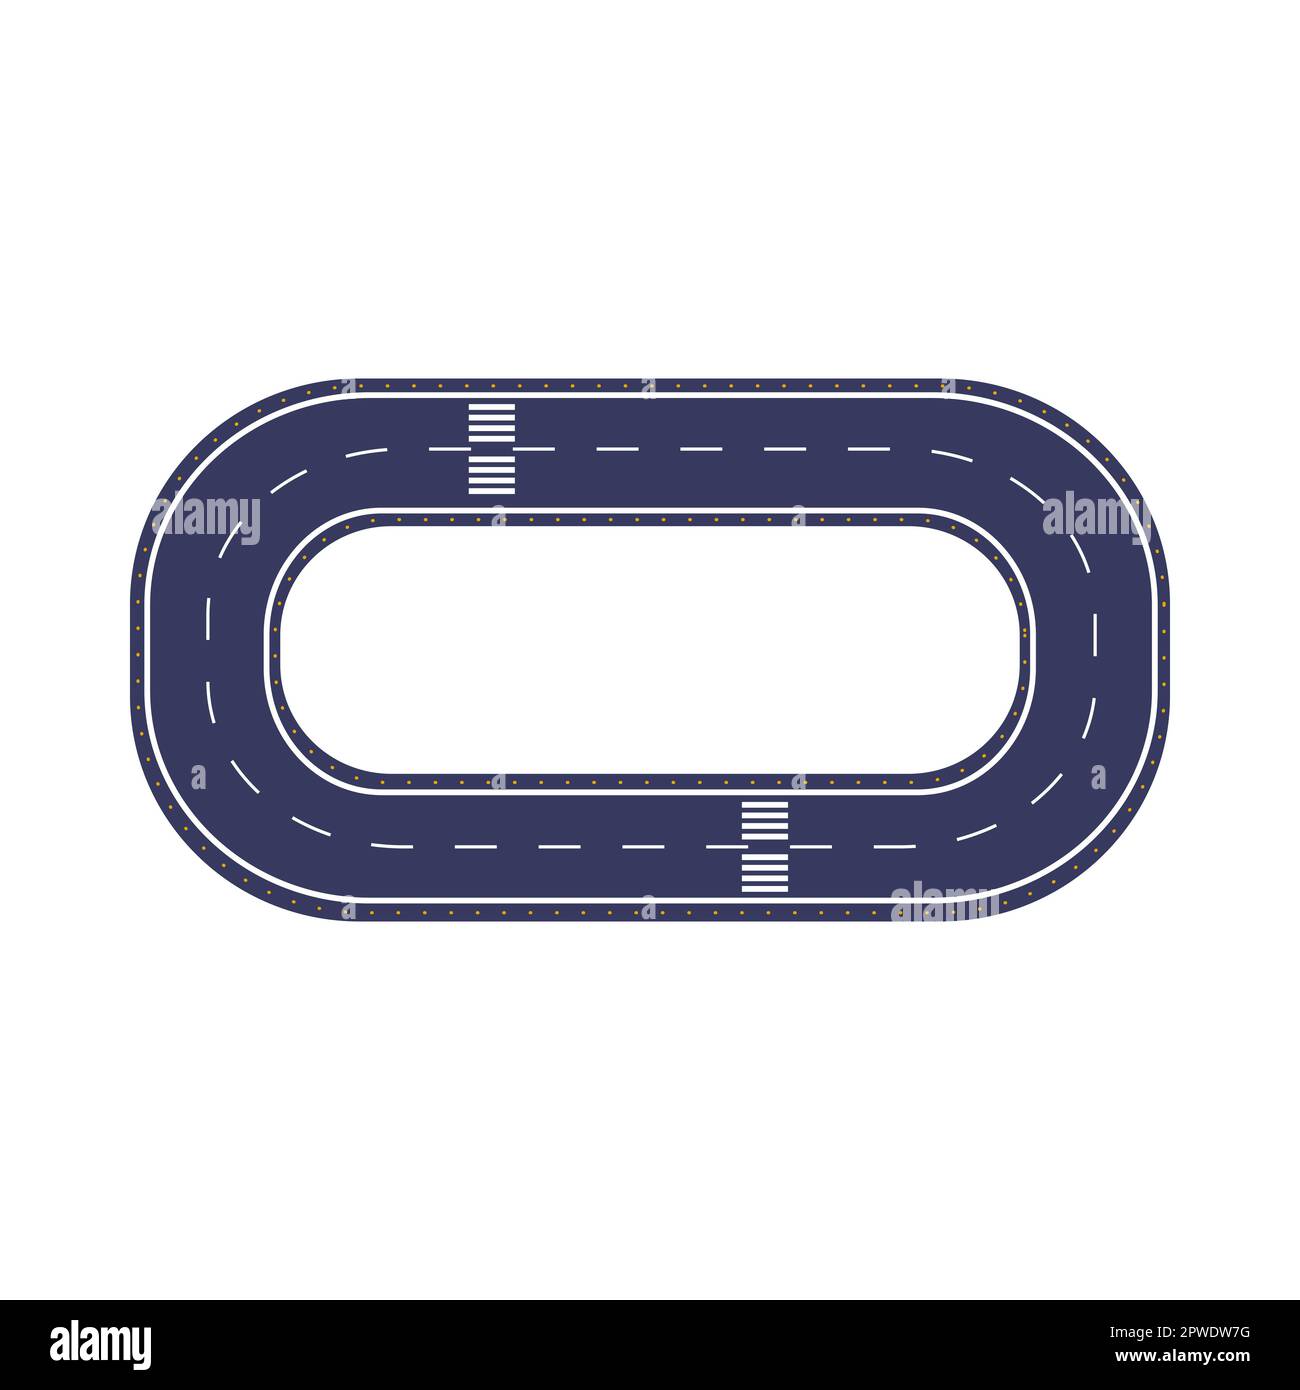 Airport runway ring for landing airplane cartoon illustration Stock Vector